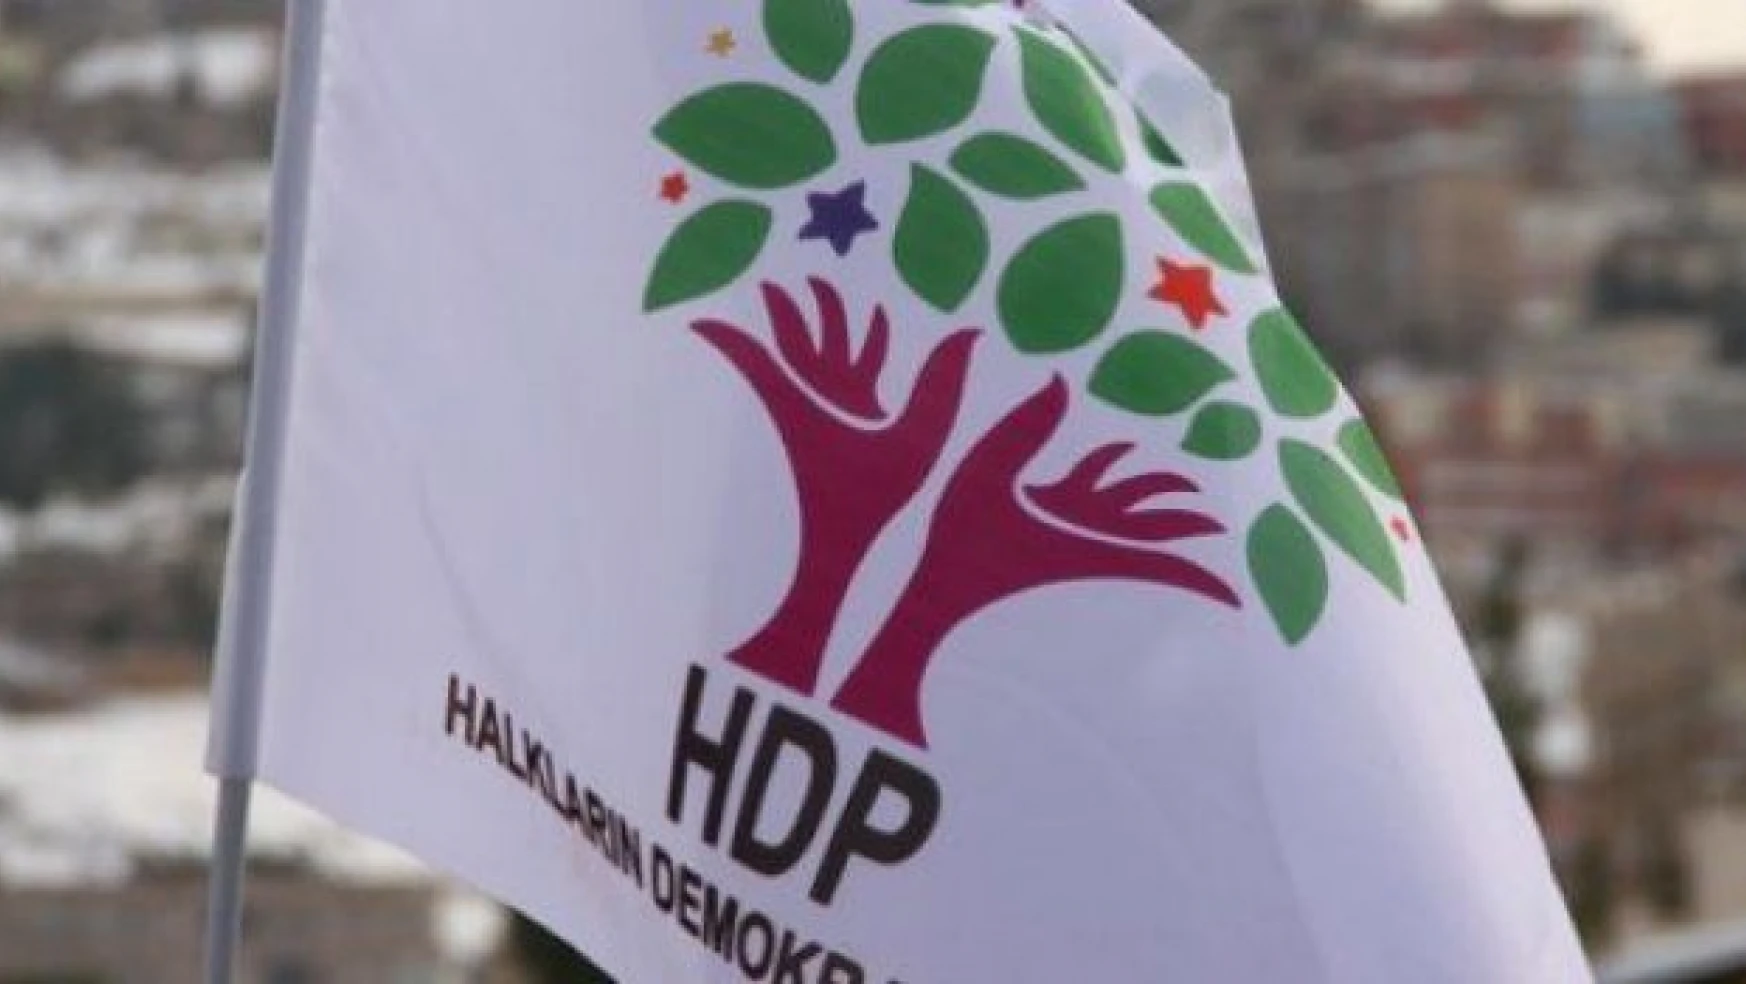  HDP'nin binasında mühürsüz oy pusulaları çıktı